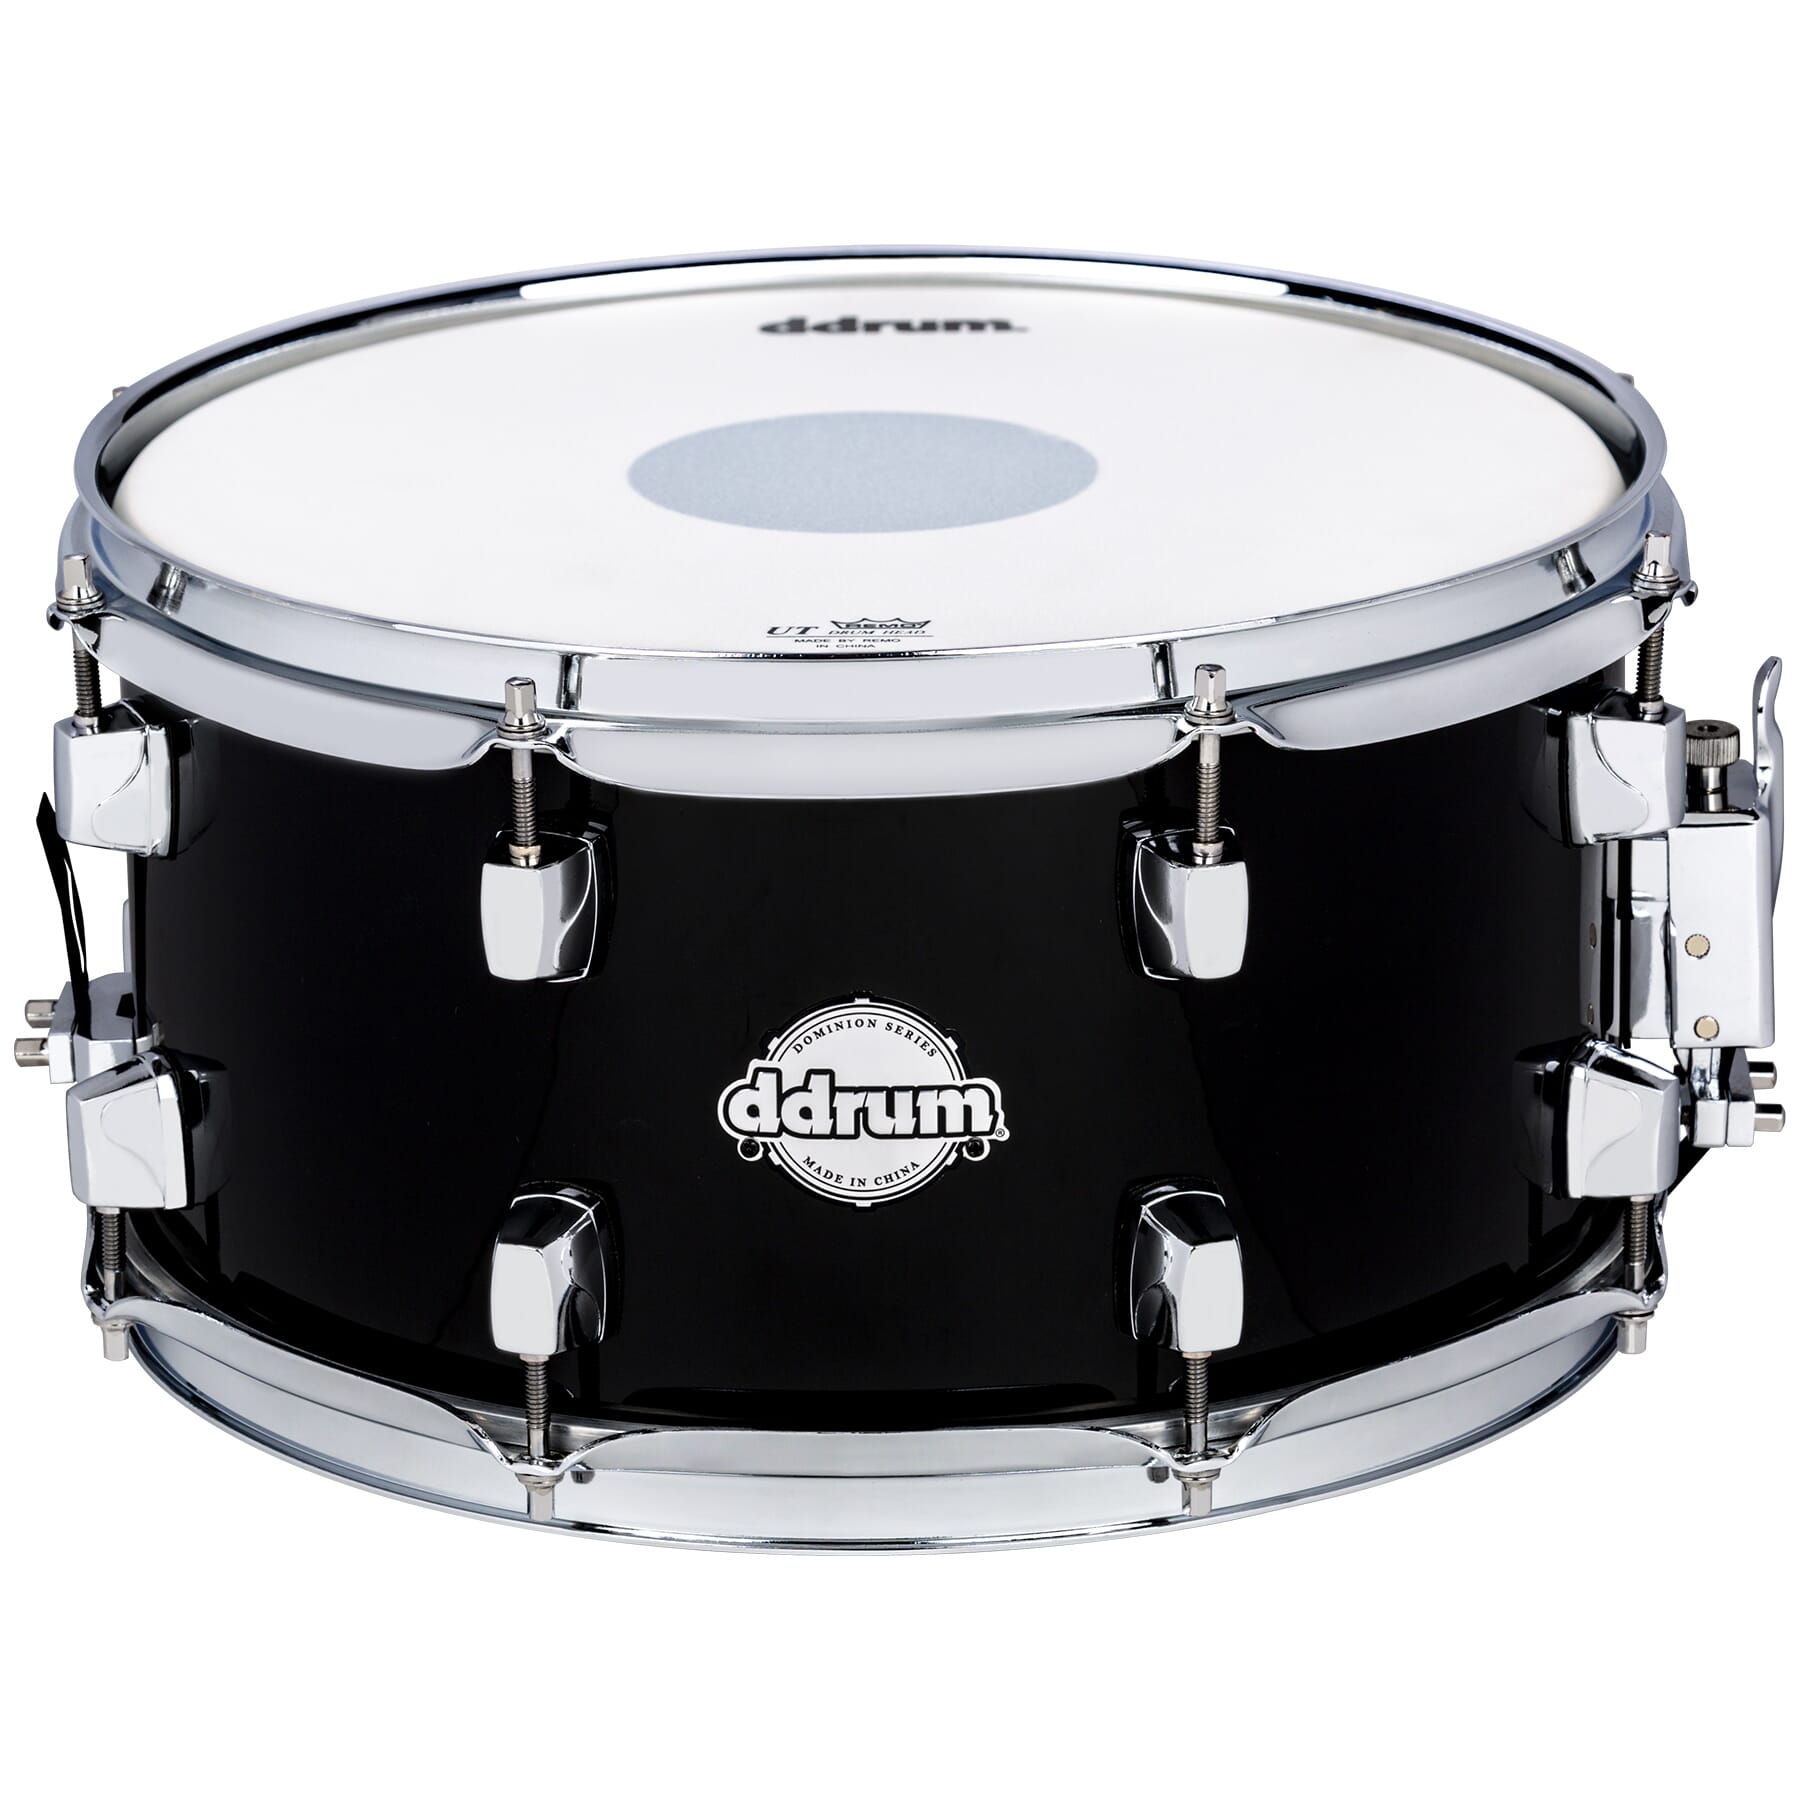 Dominion Series 7x13 Black Wrap Snare Drum